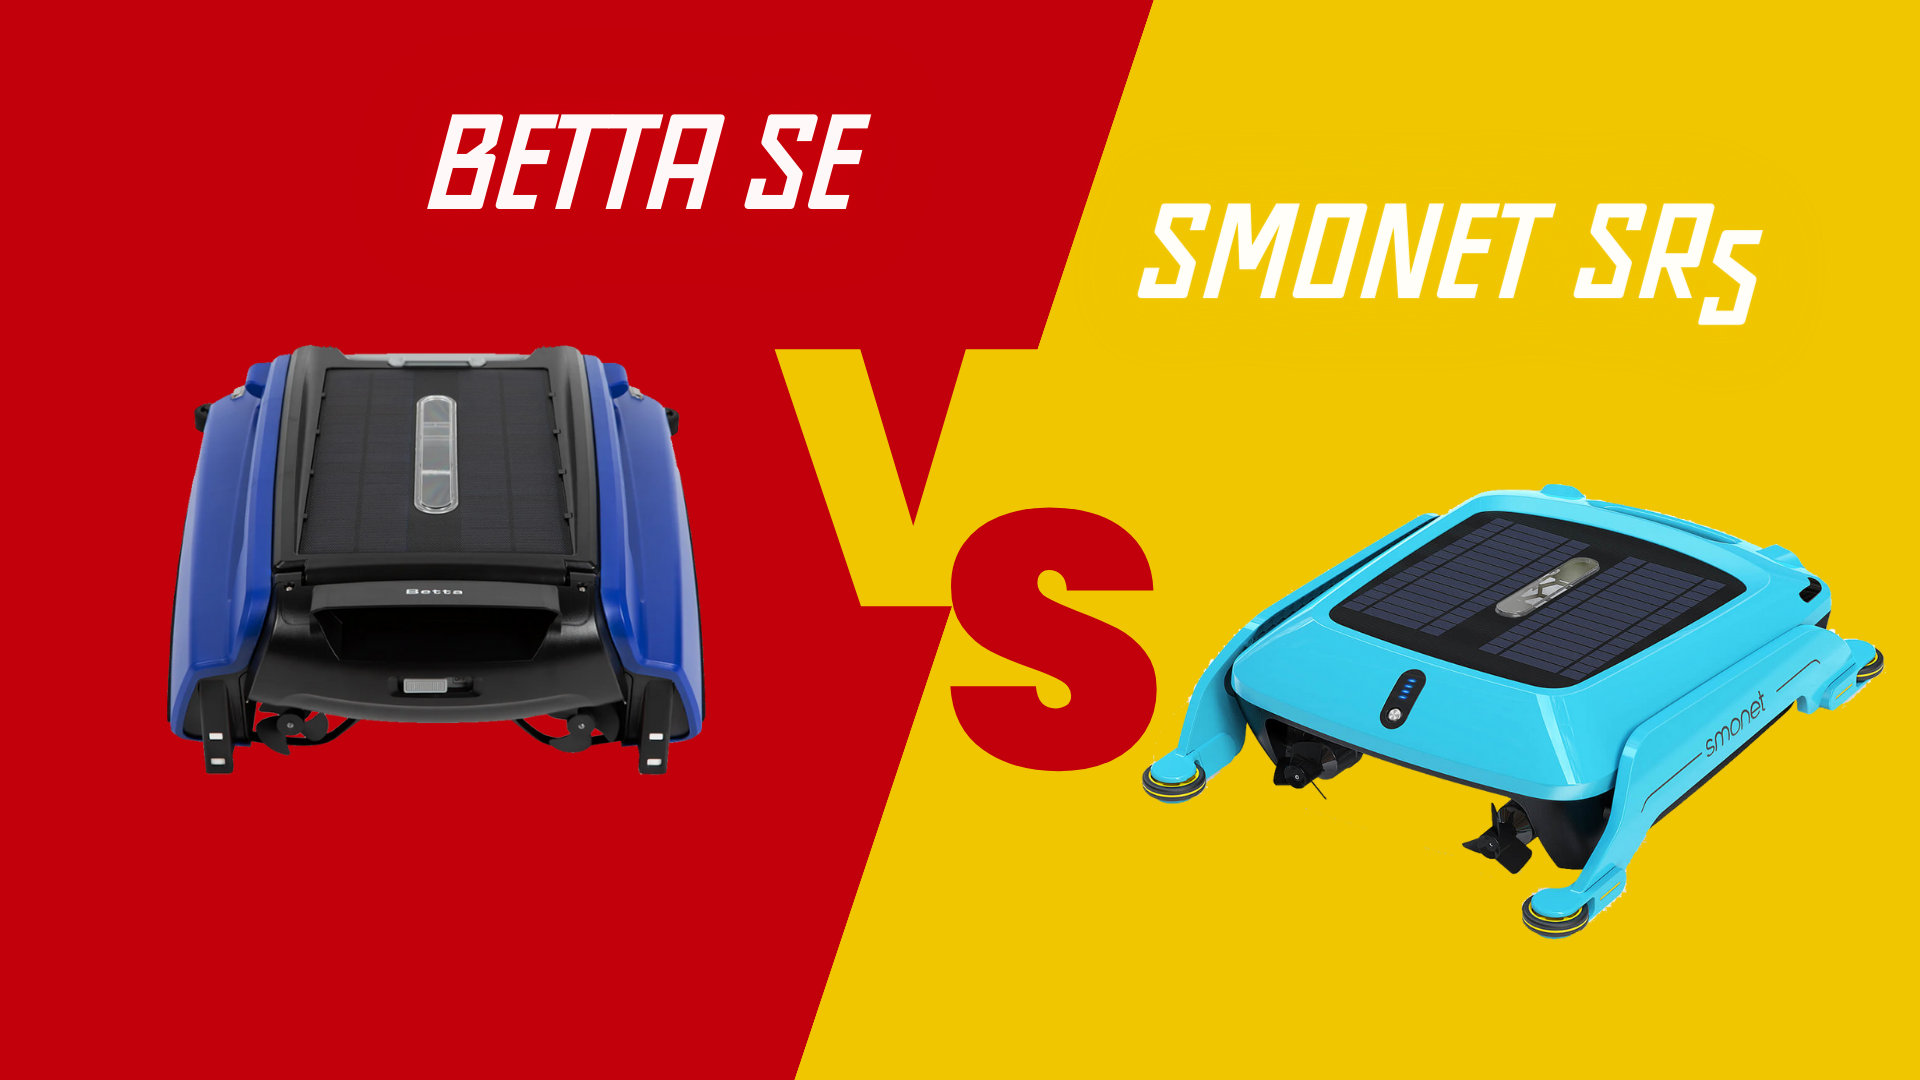 Which one is better, SMONET SR5 vs Betta SE?